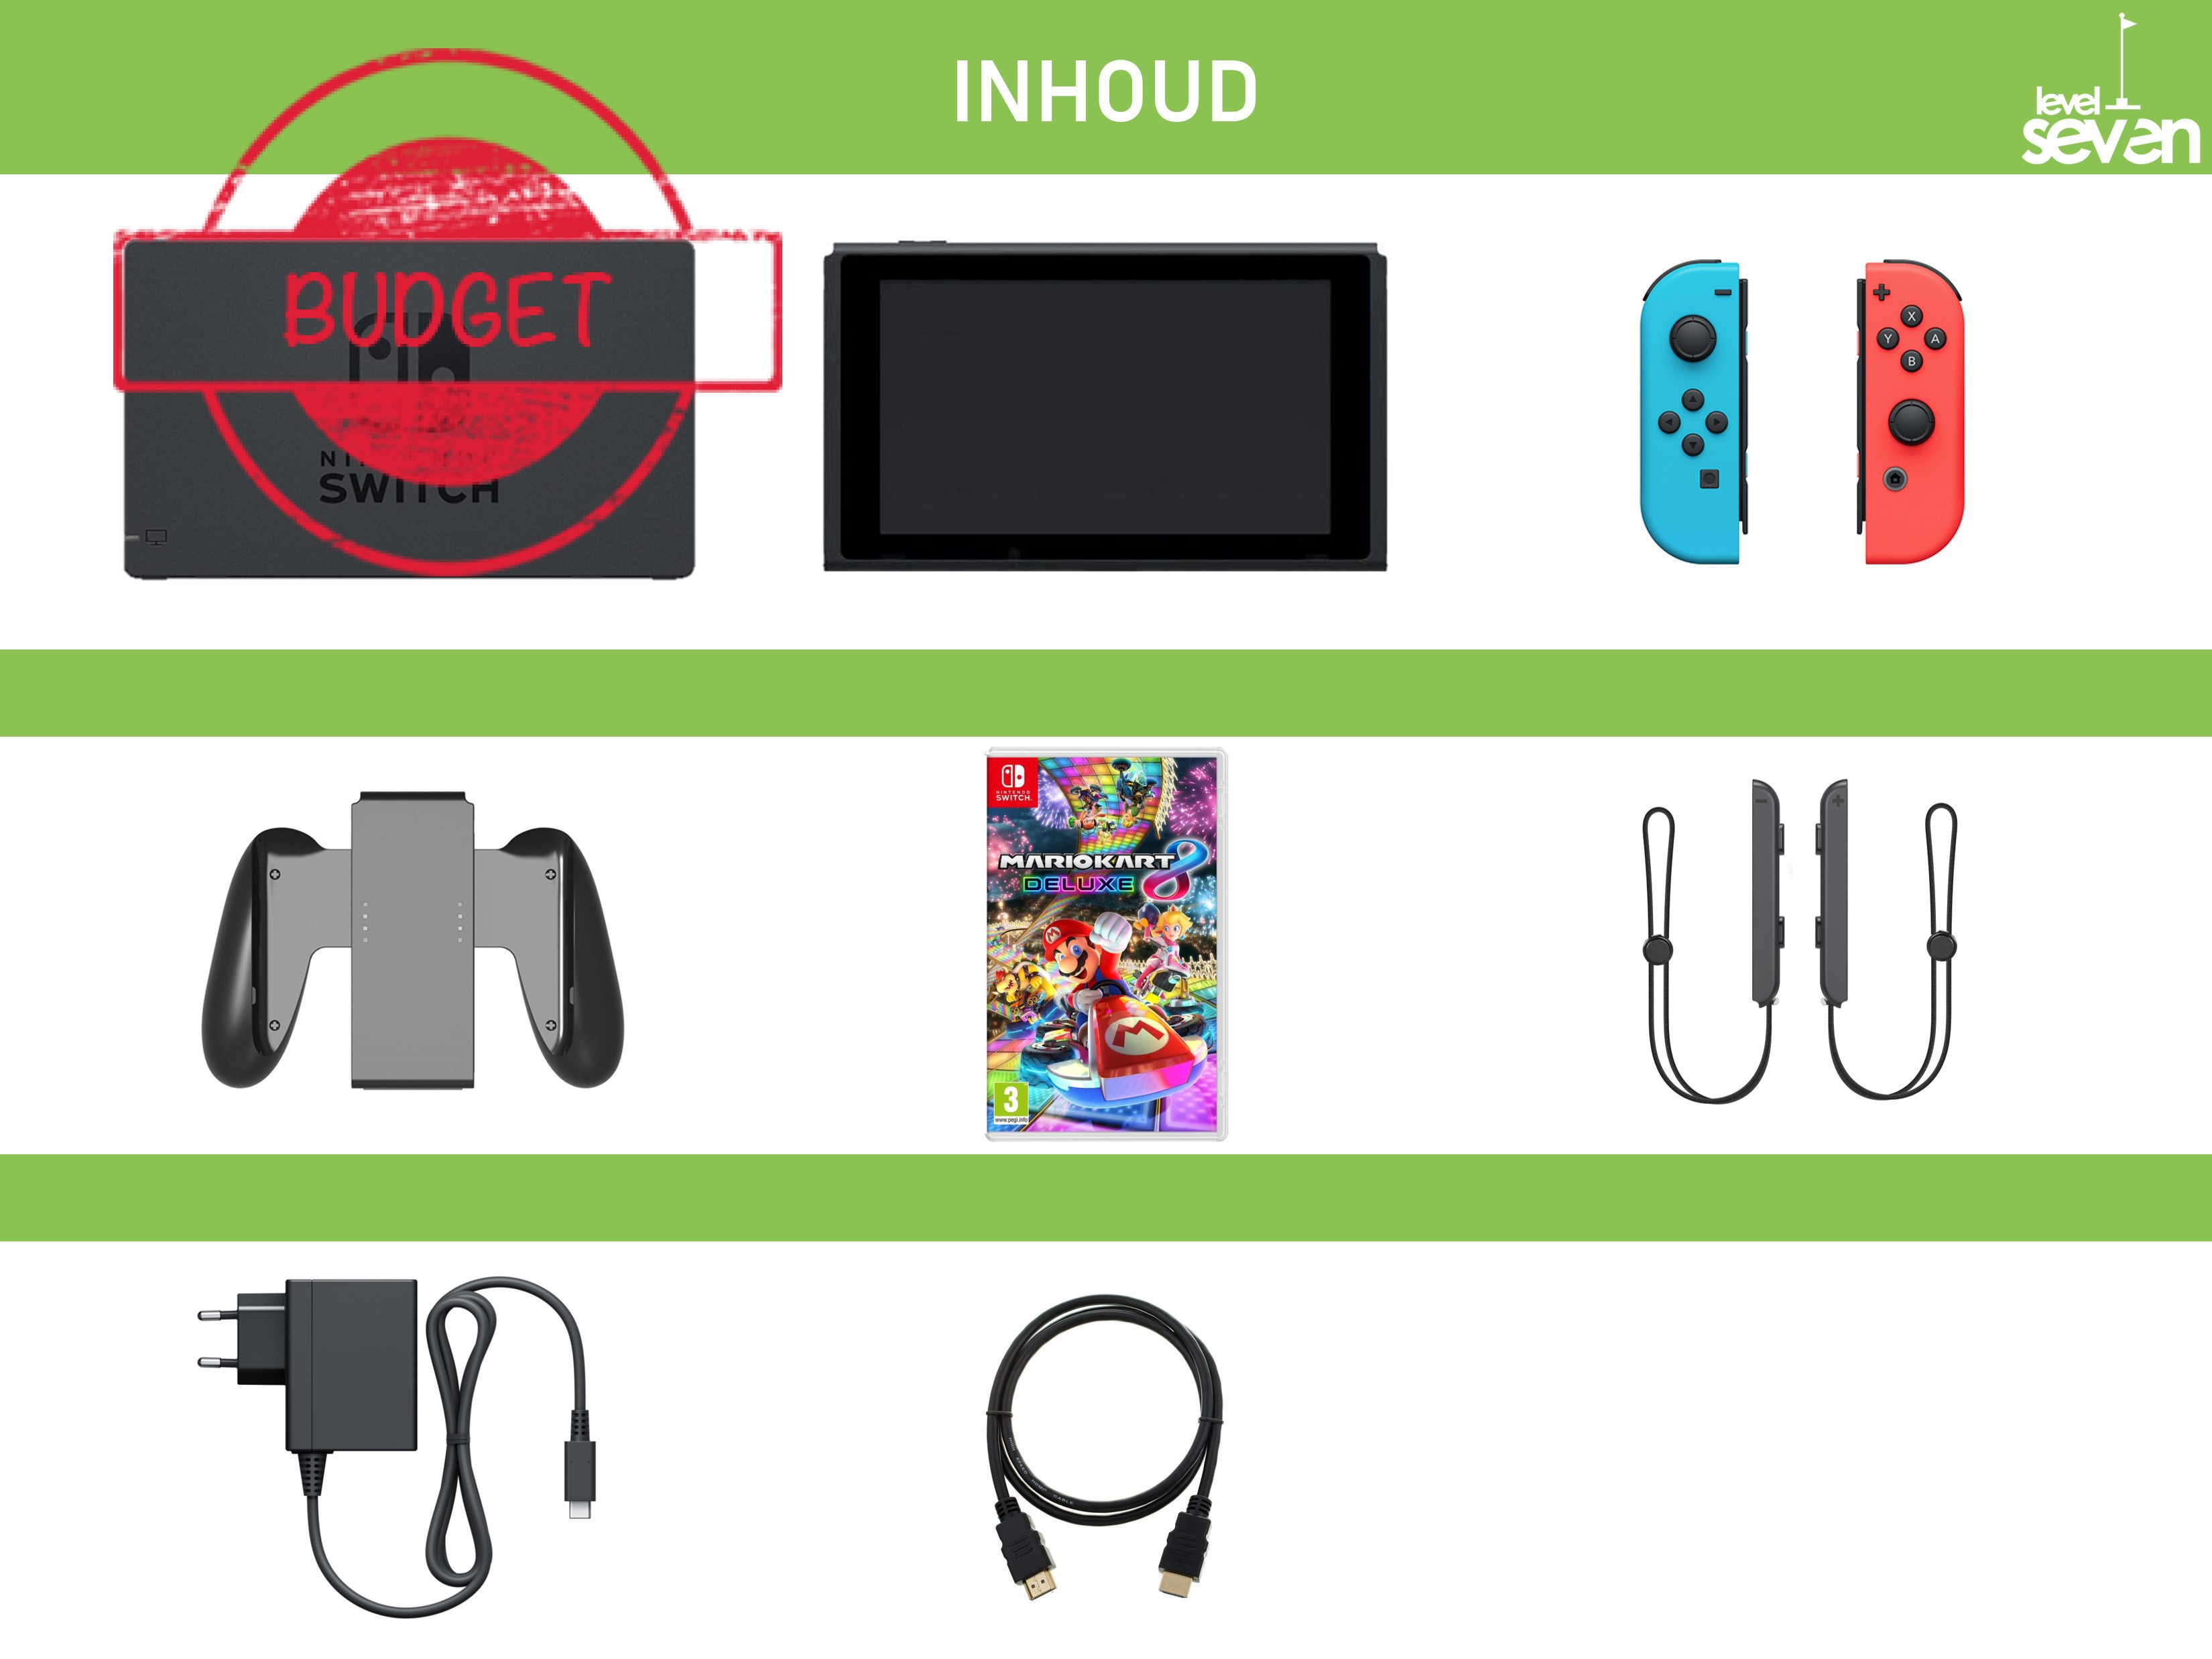 Nintendo Switch Starter Pack - Mario Kart 8 Deluxe Rood/Blauw Edition - Budget - Nintendo Switch Hardware - 6